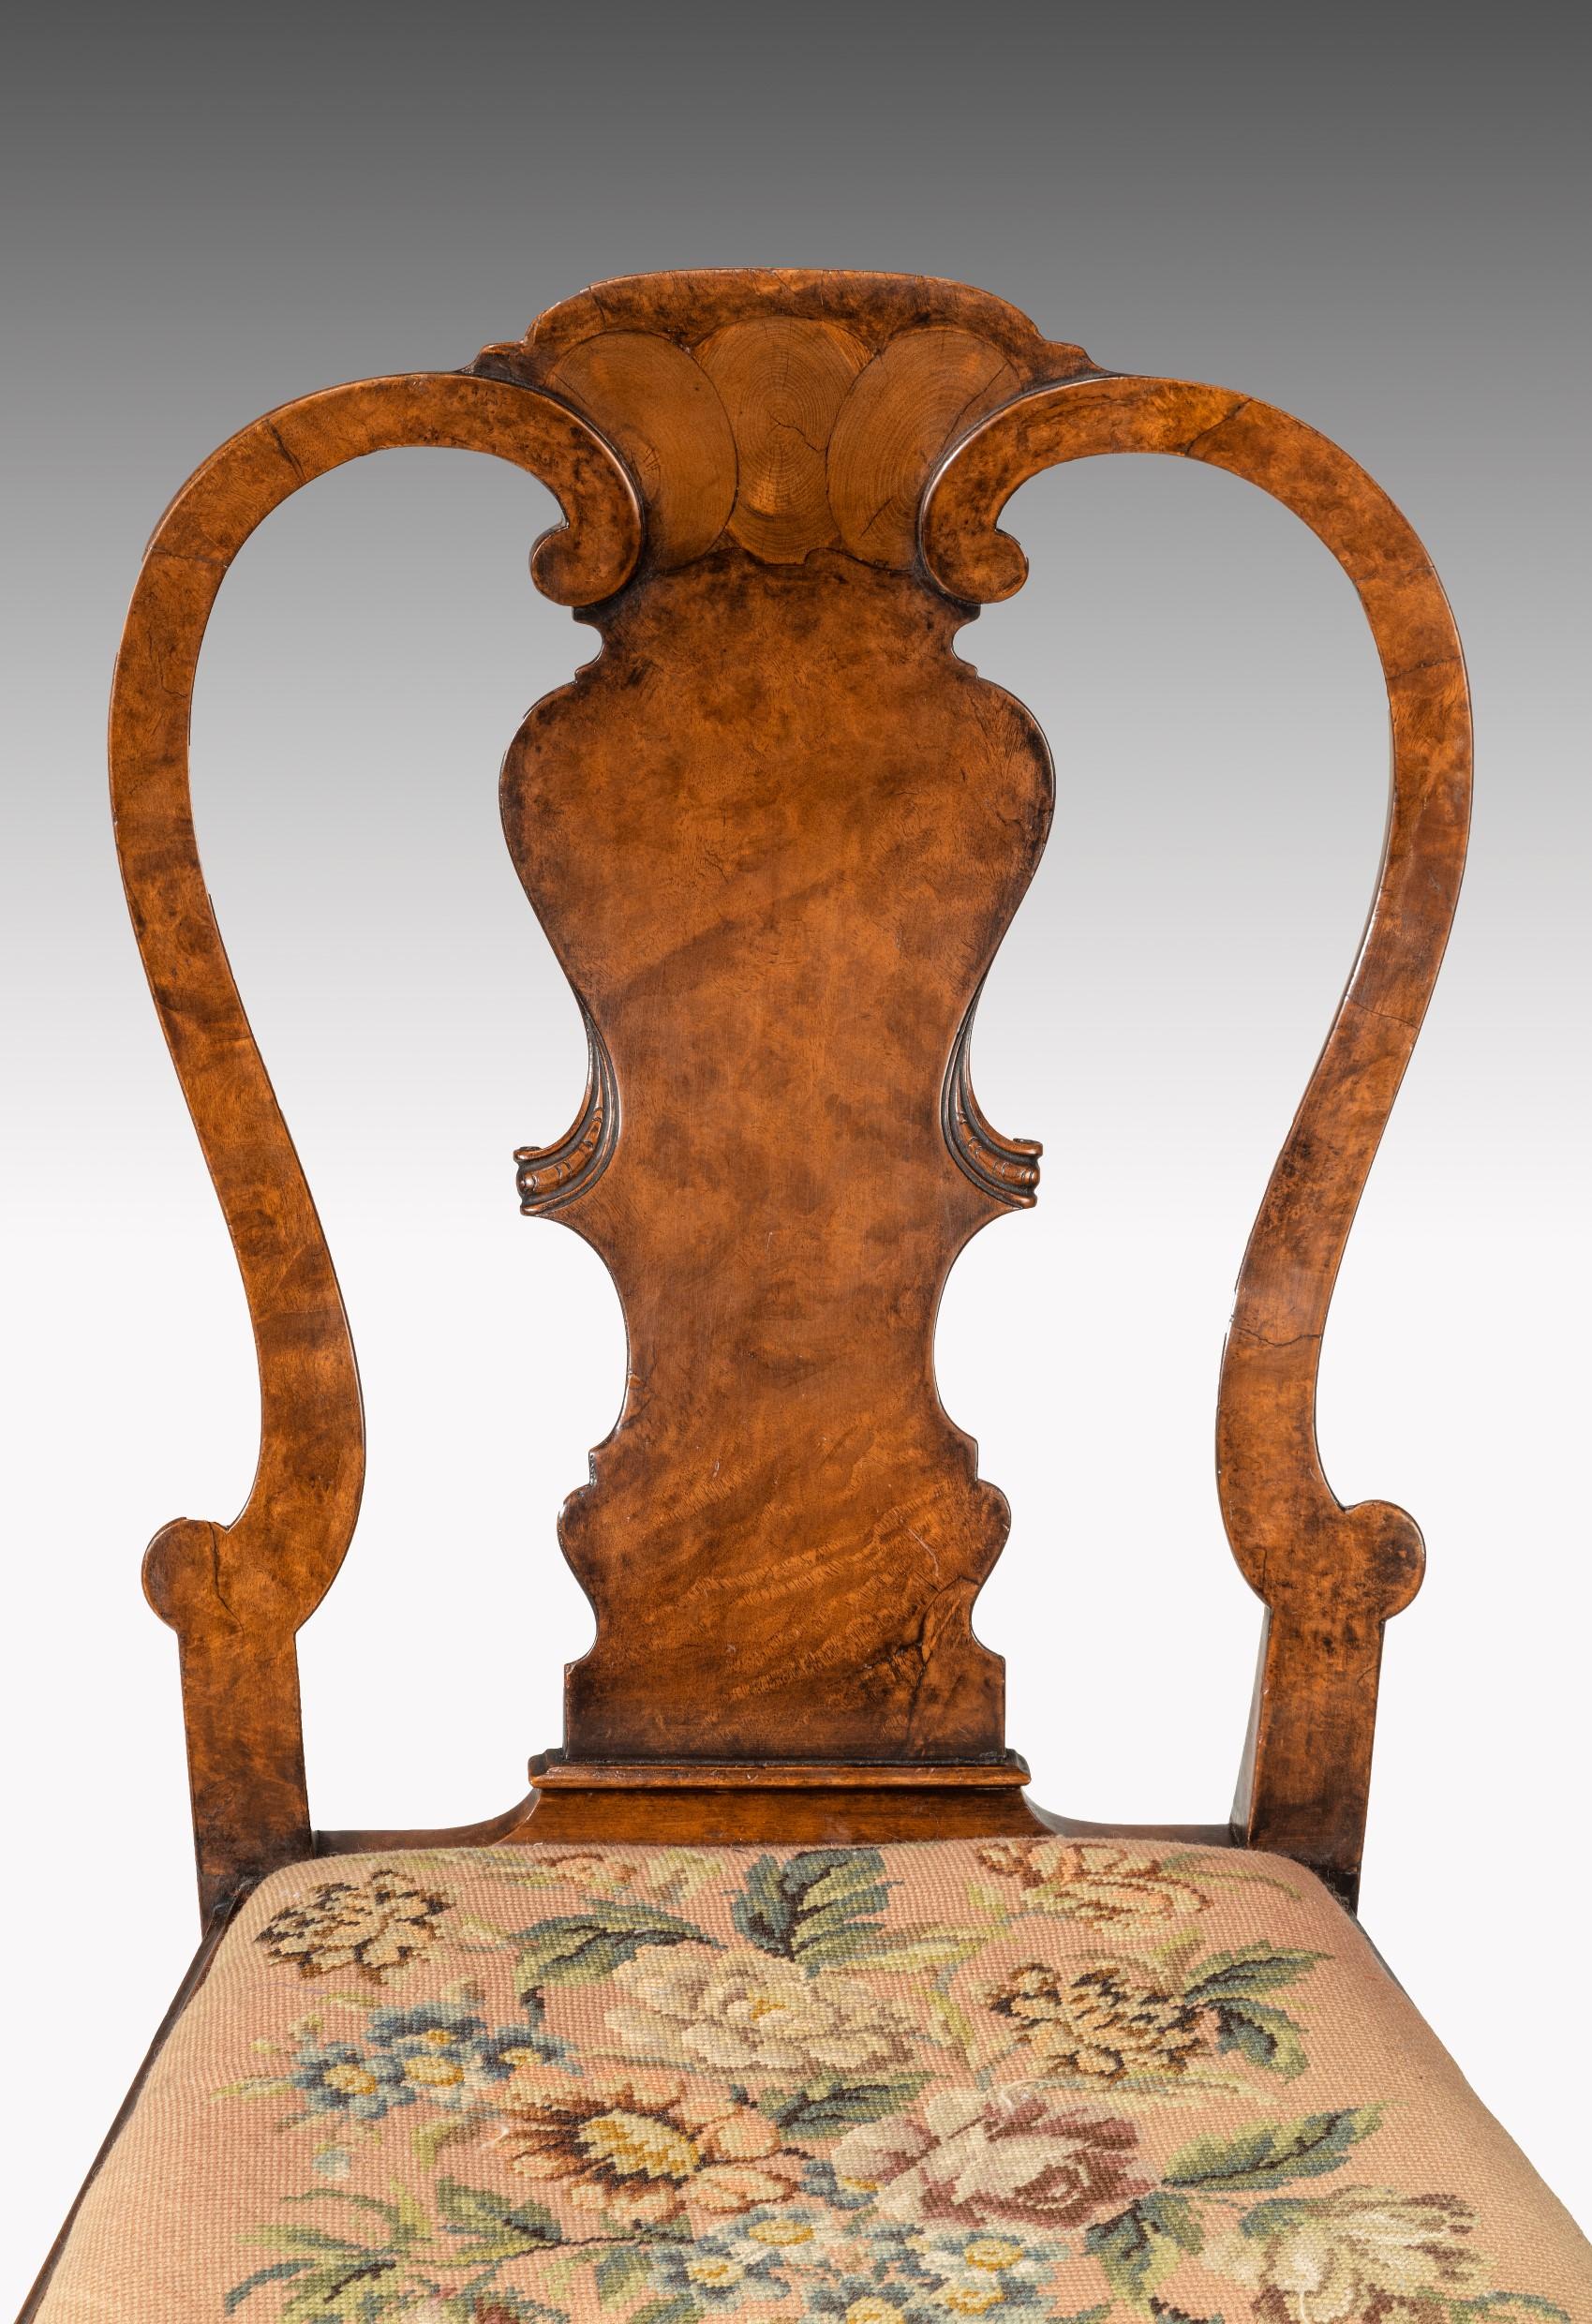 English Quality 19th Century Walnut Side Chair with Original Needlework Seat